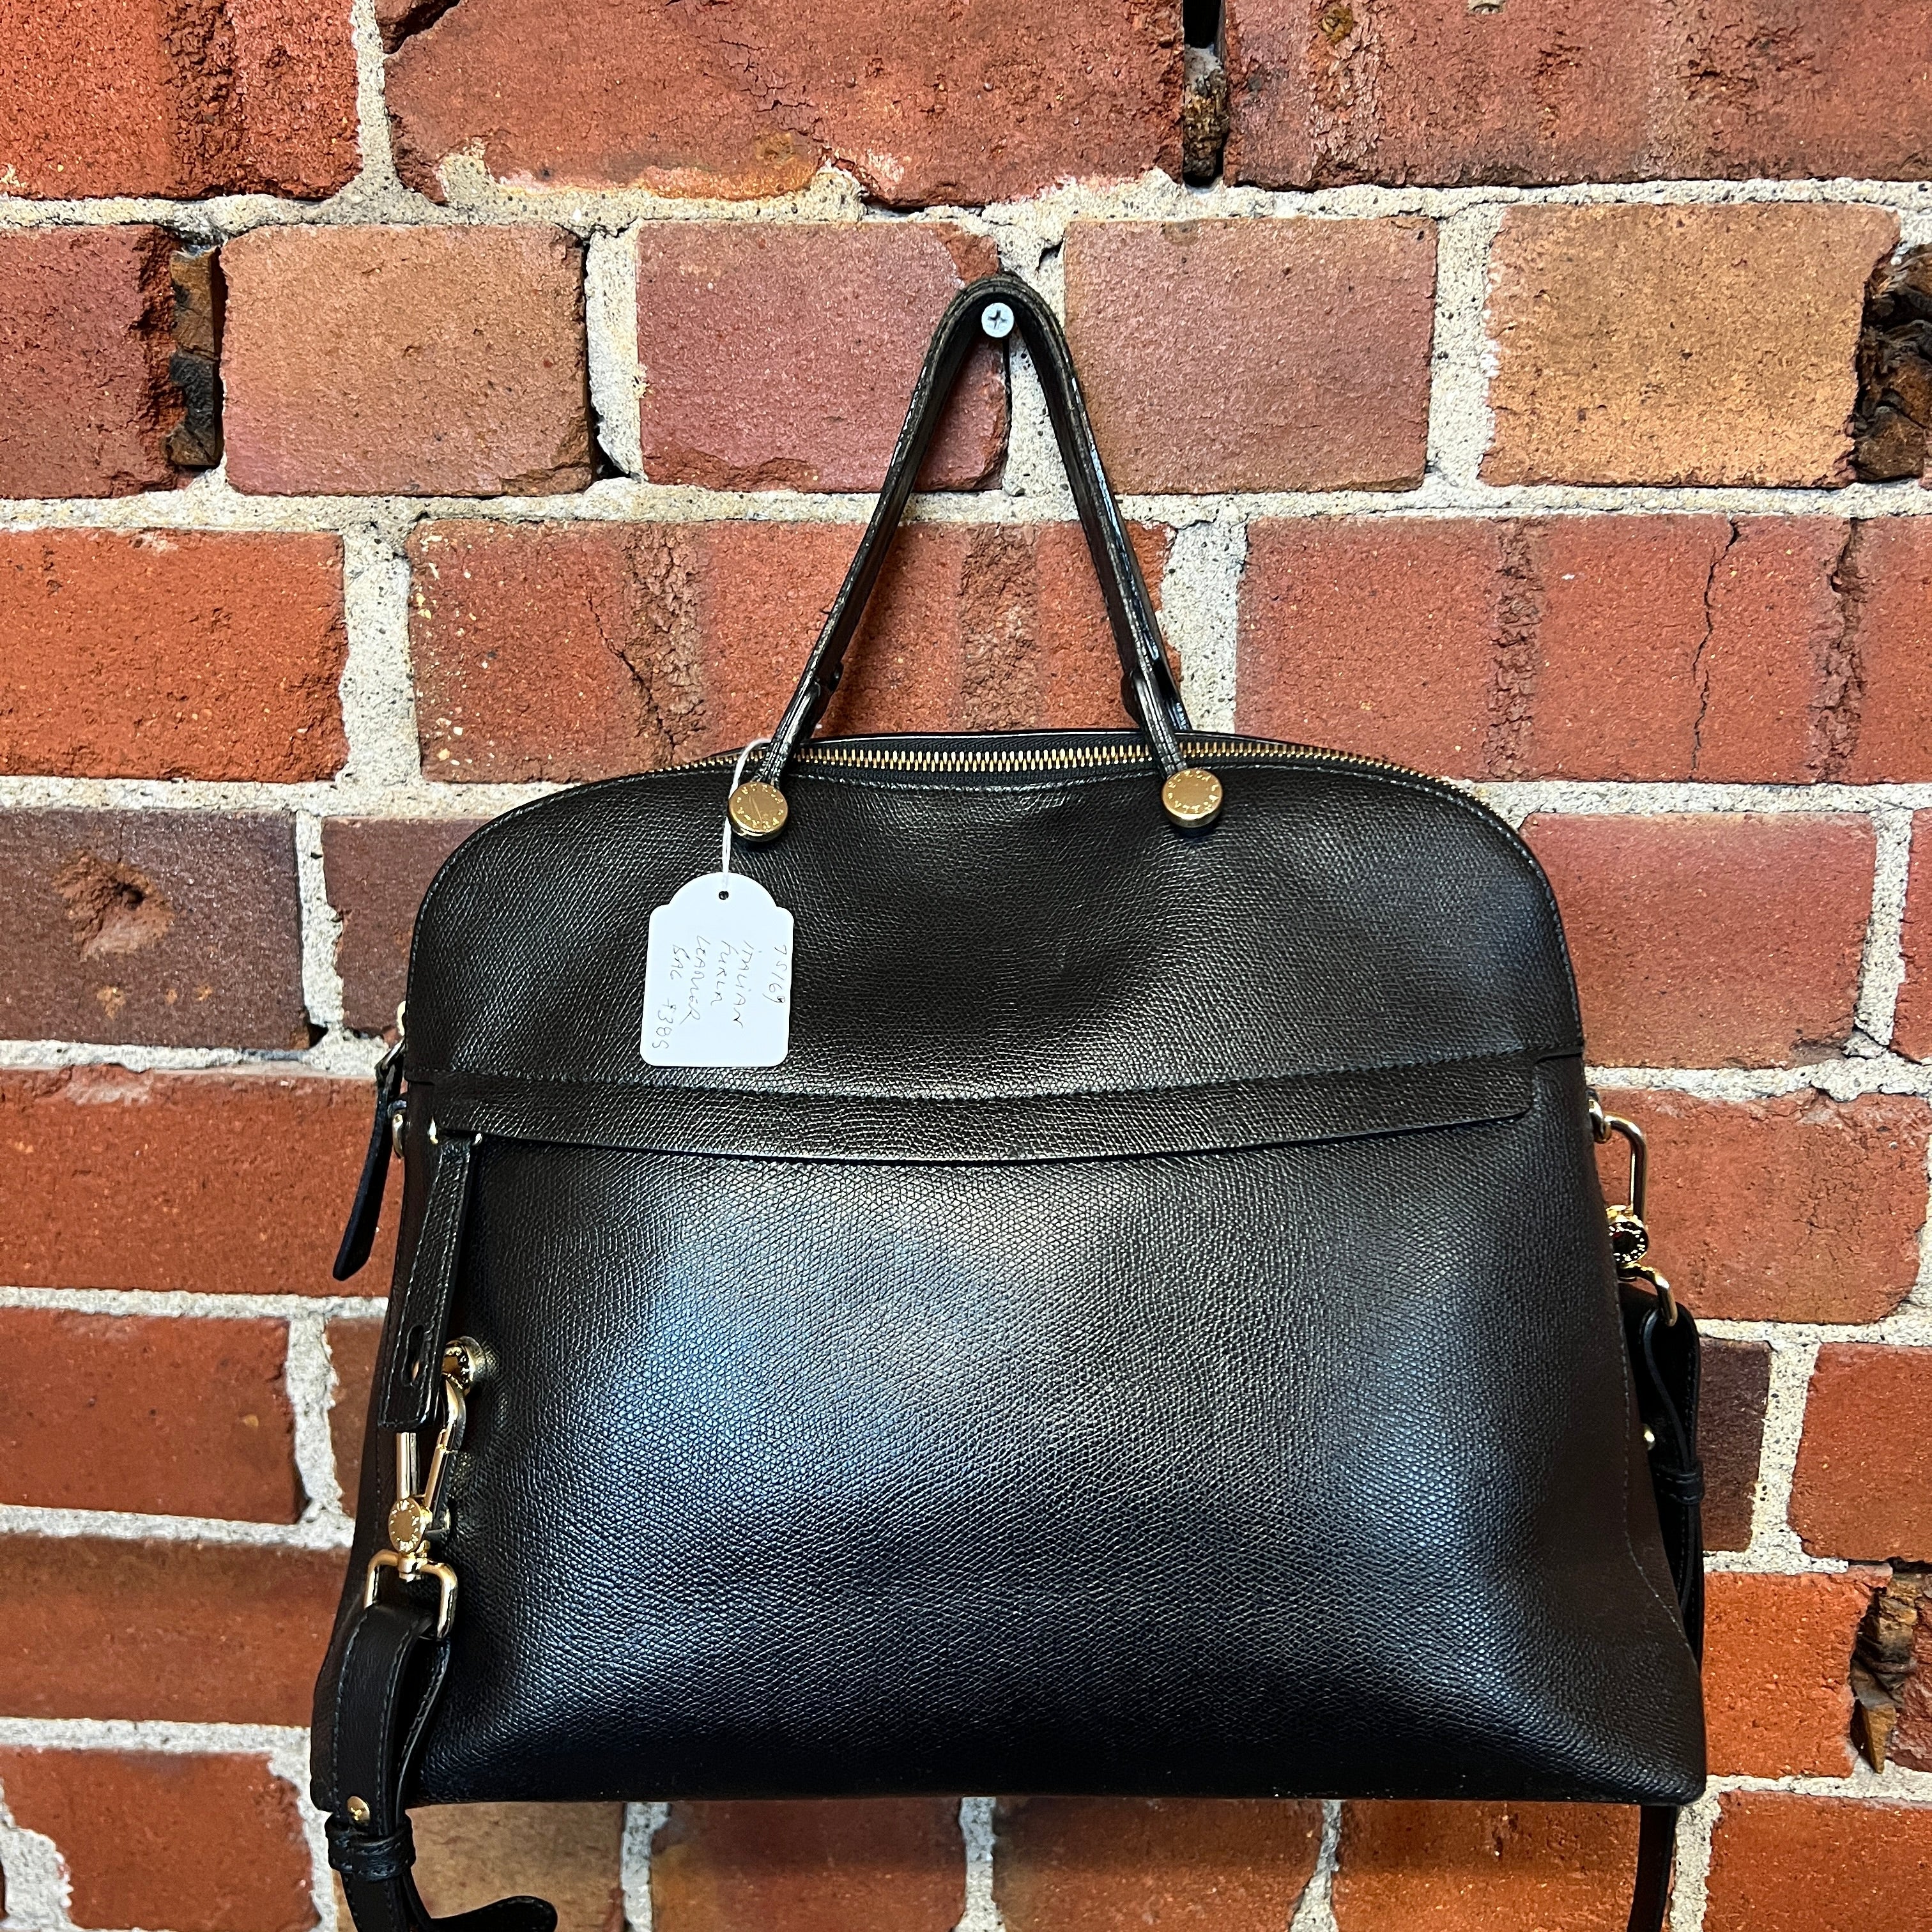 FURLA Leather handbag